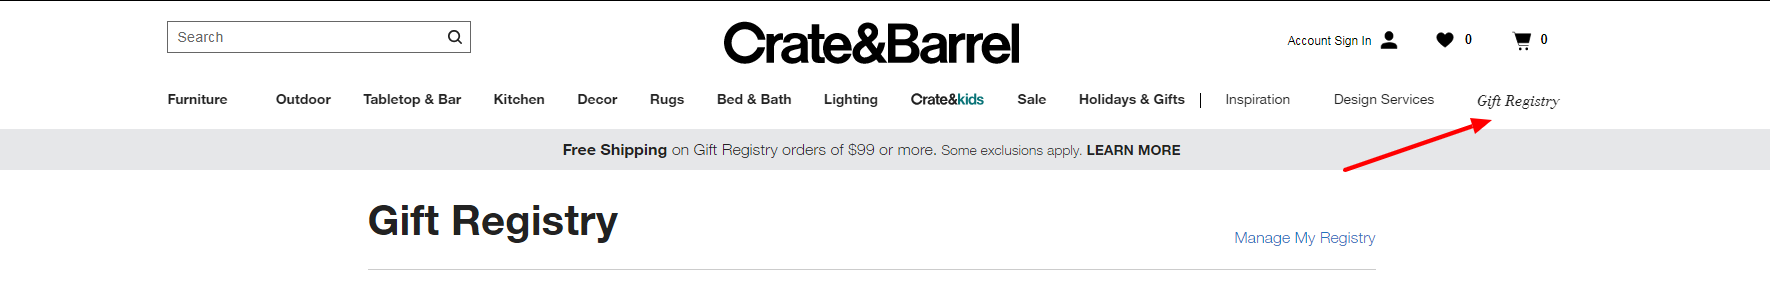 log in crate barrel credit card account 1